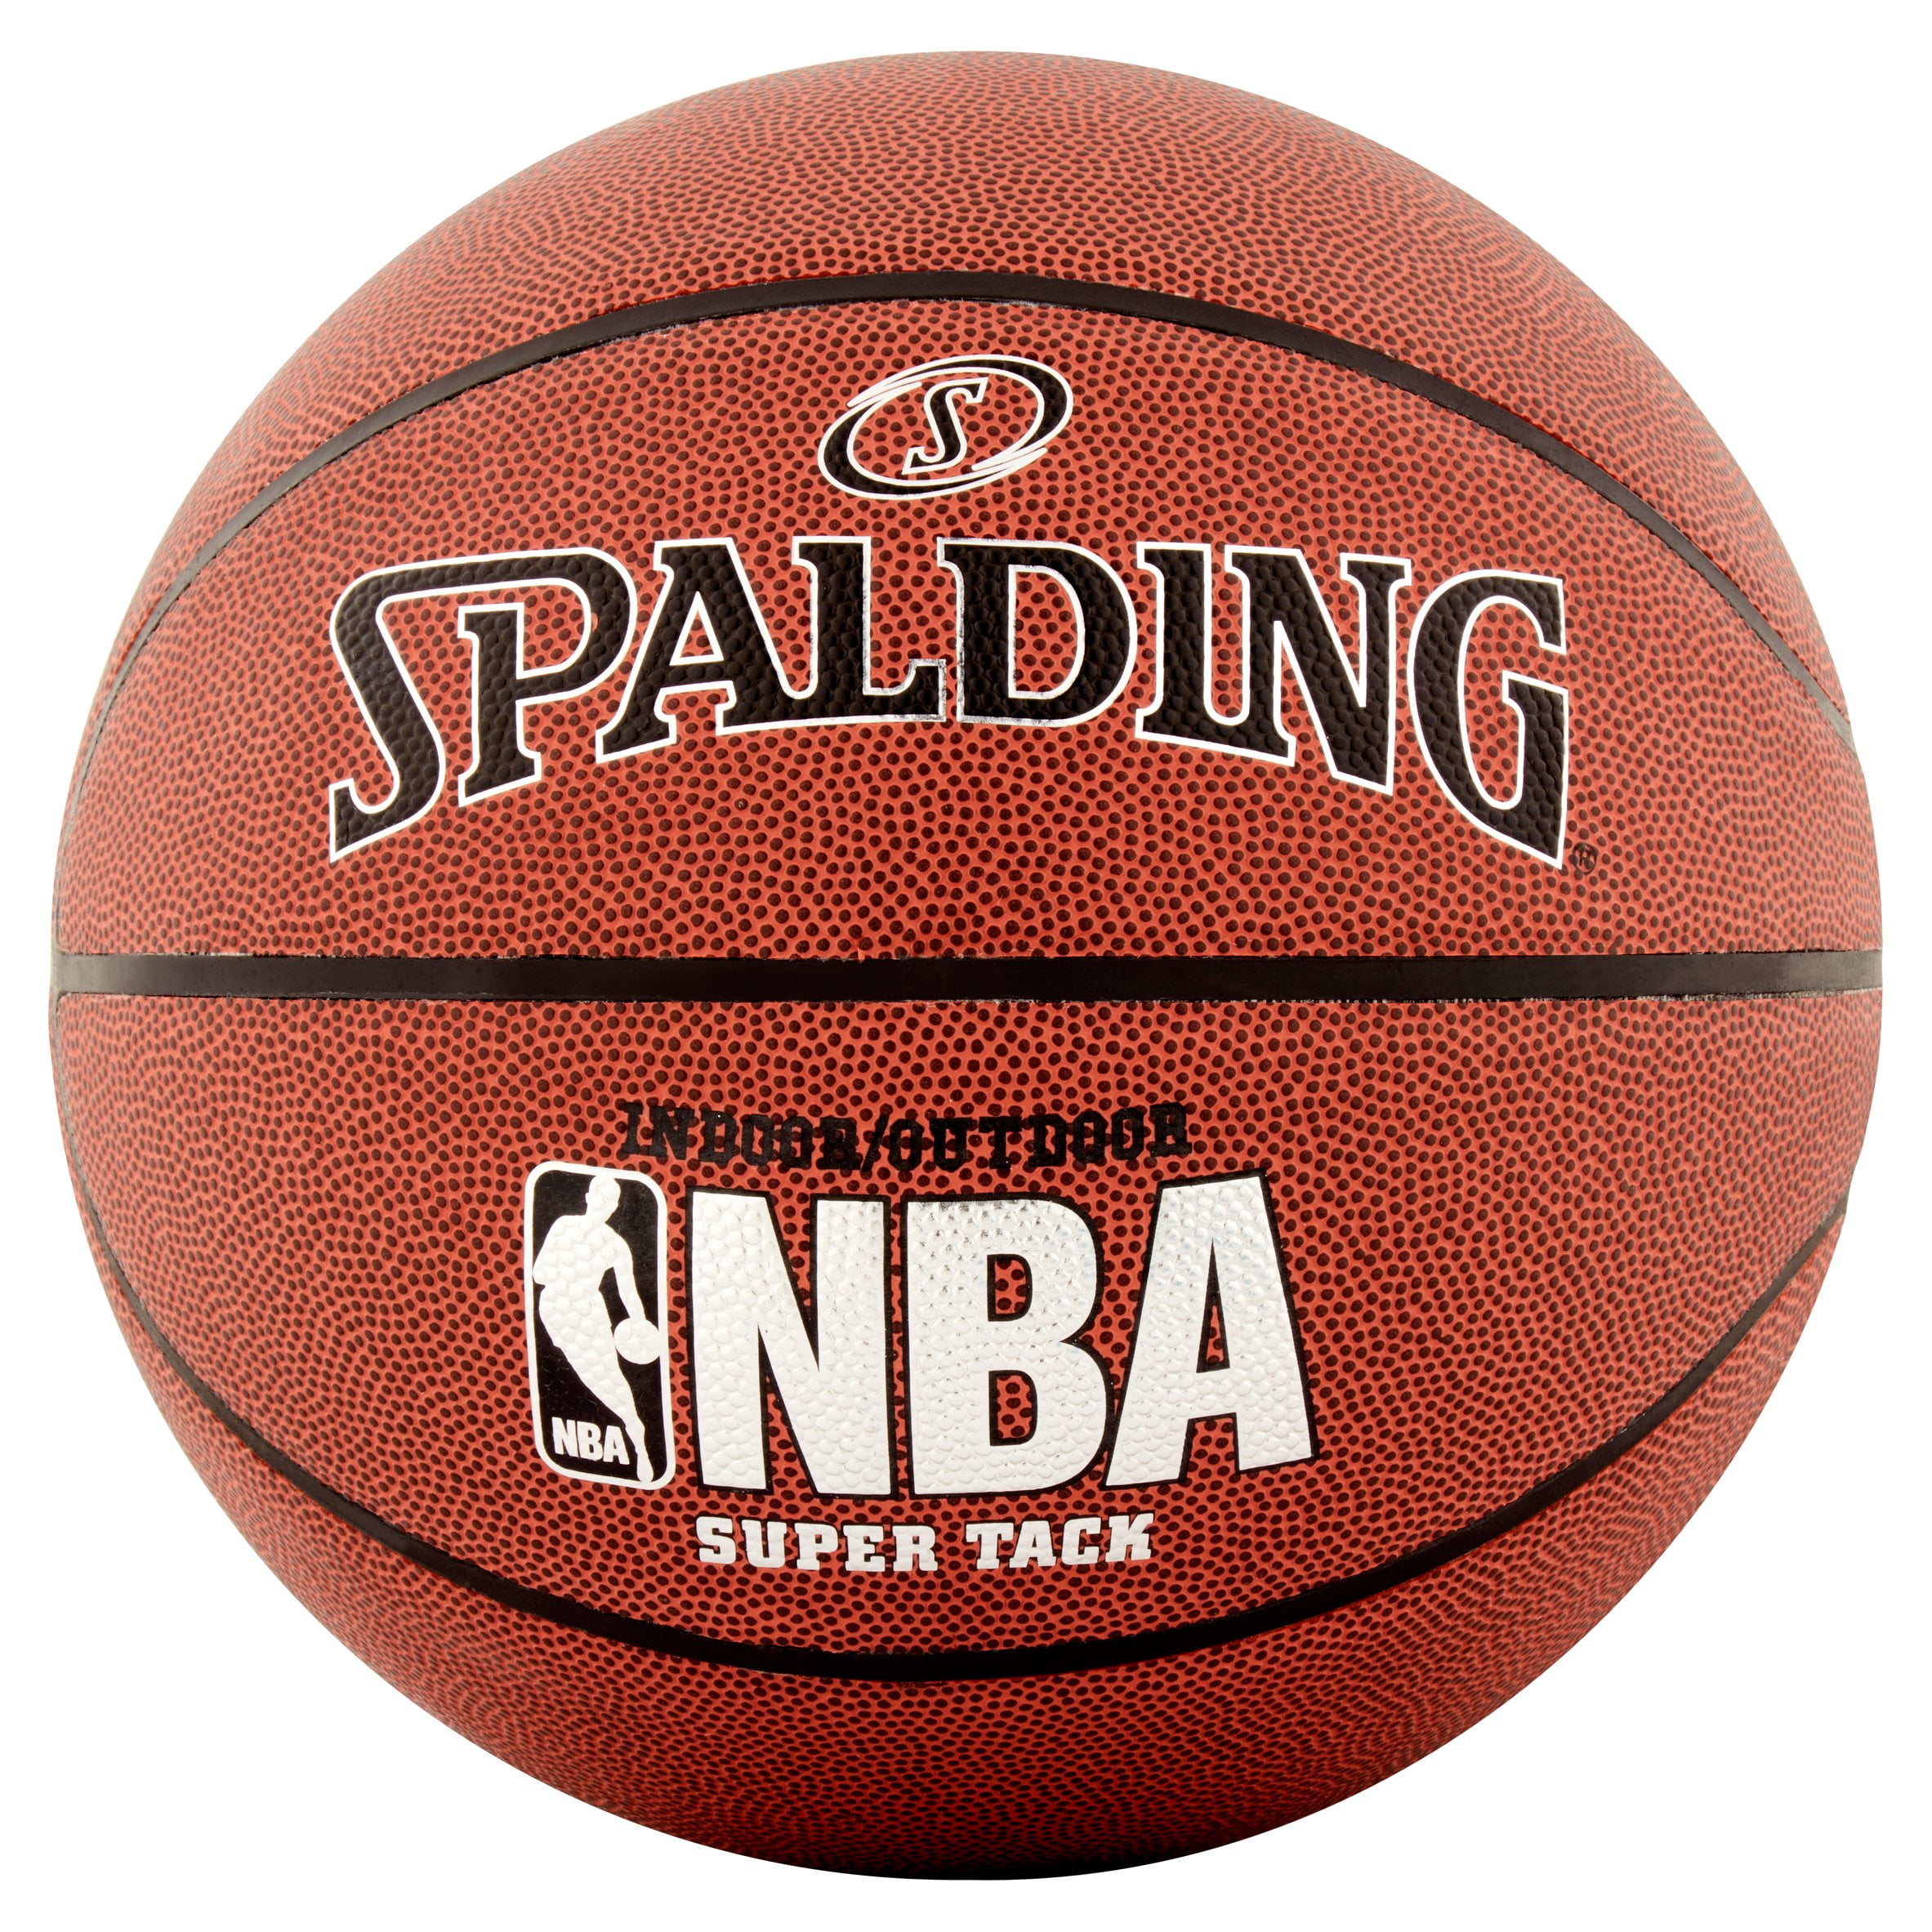 a nba basketball